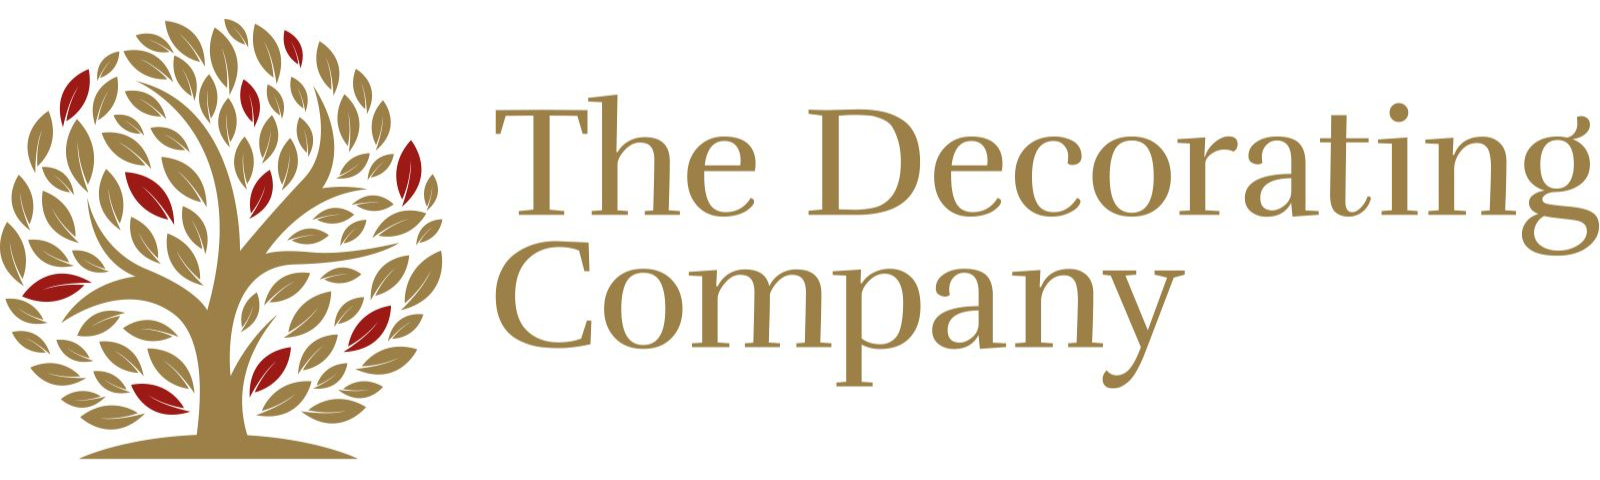 The Decorating Company